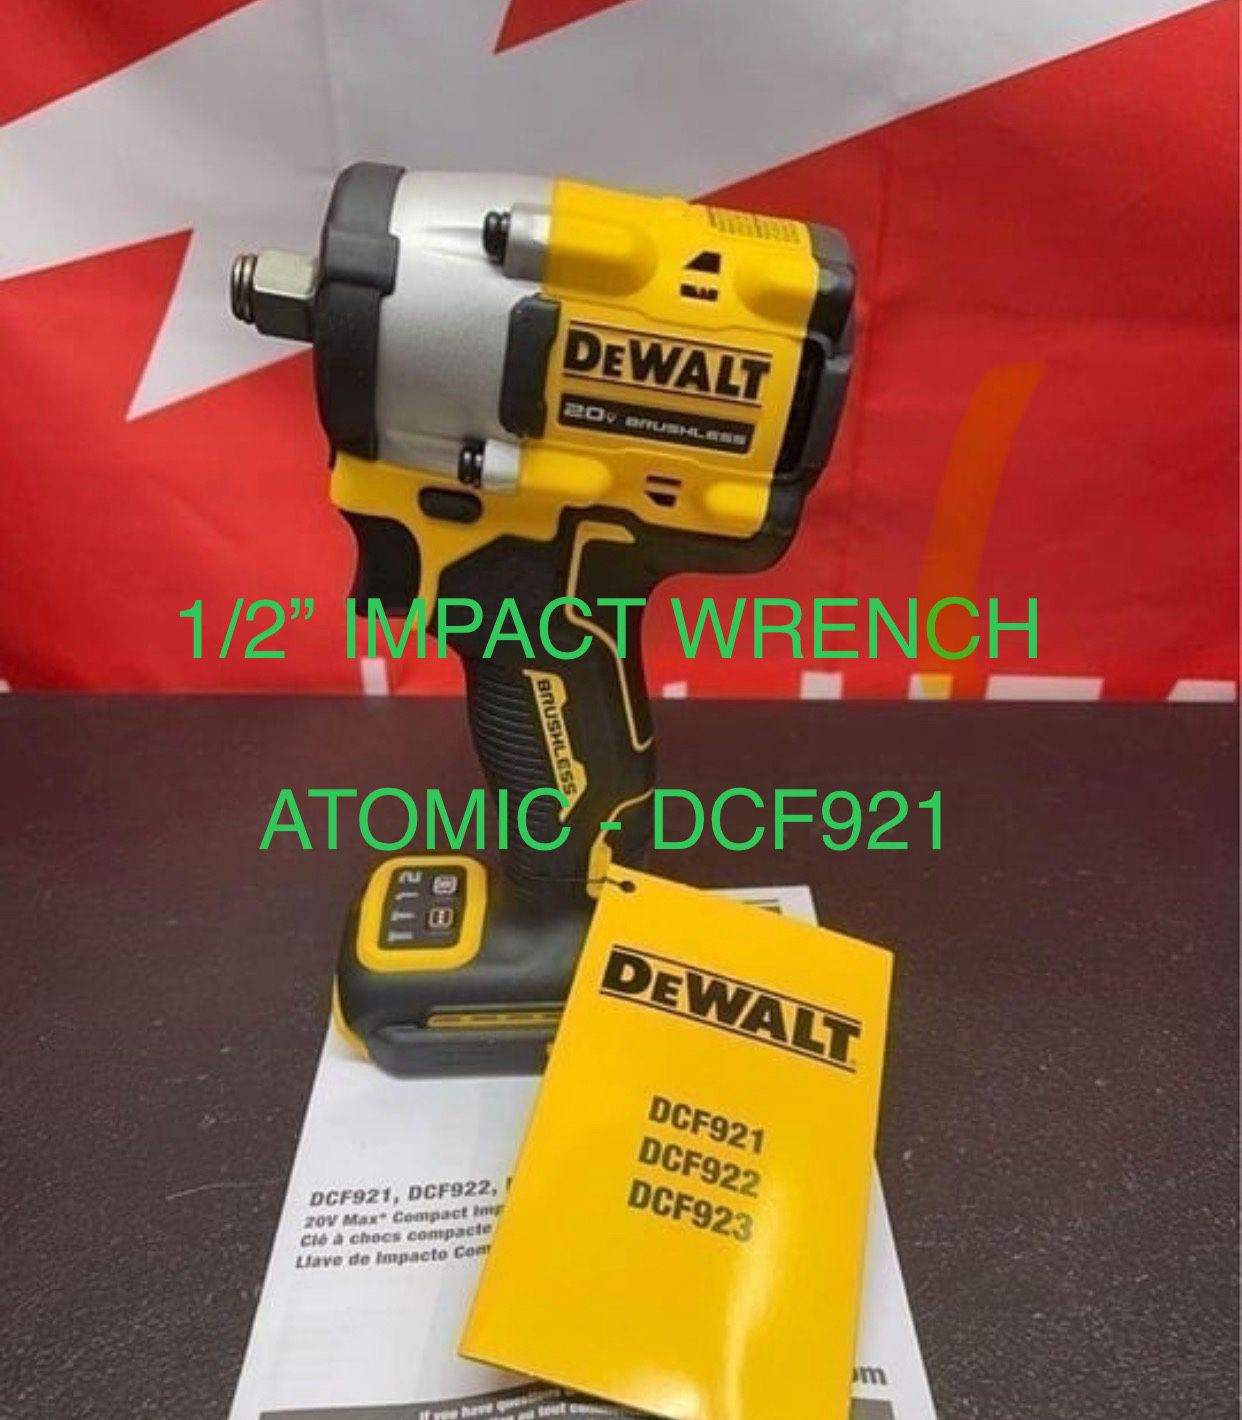 Dewalt New 1/2” Impact Wrench - ATOMIC Brushless 